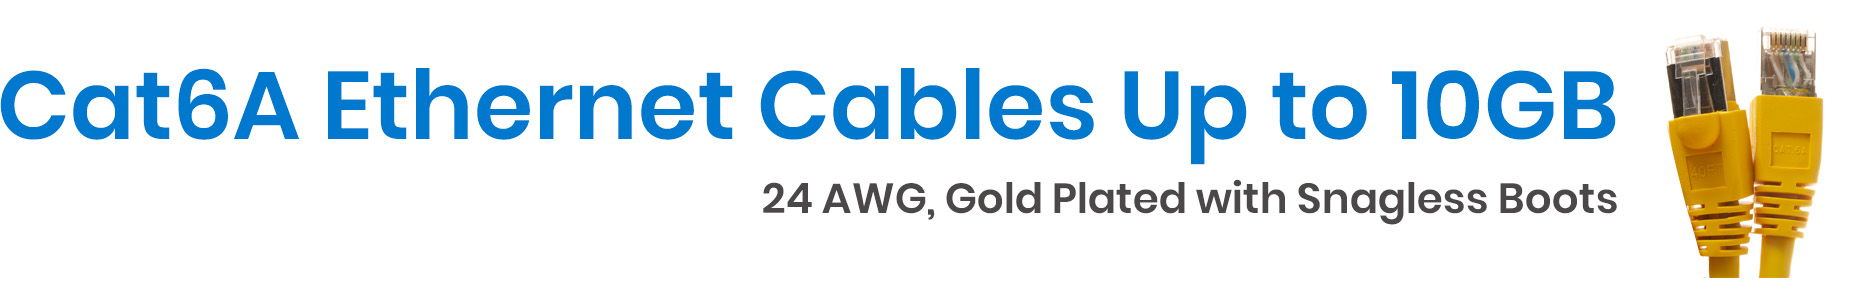 Cat6A Ethernet Cables - Shop Cables.com